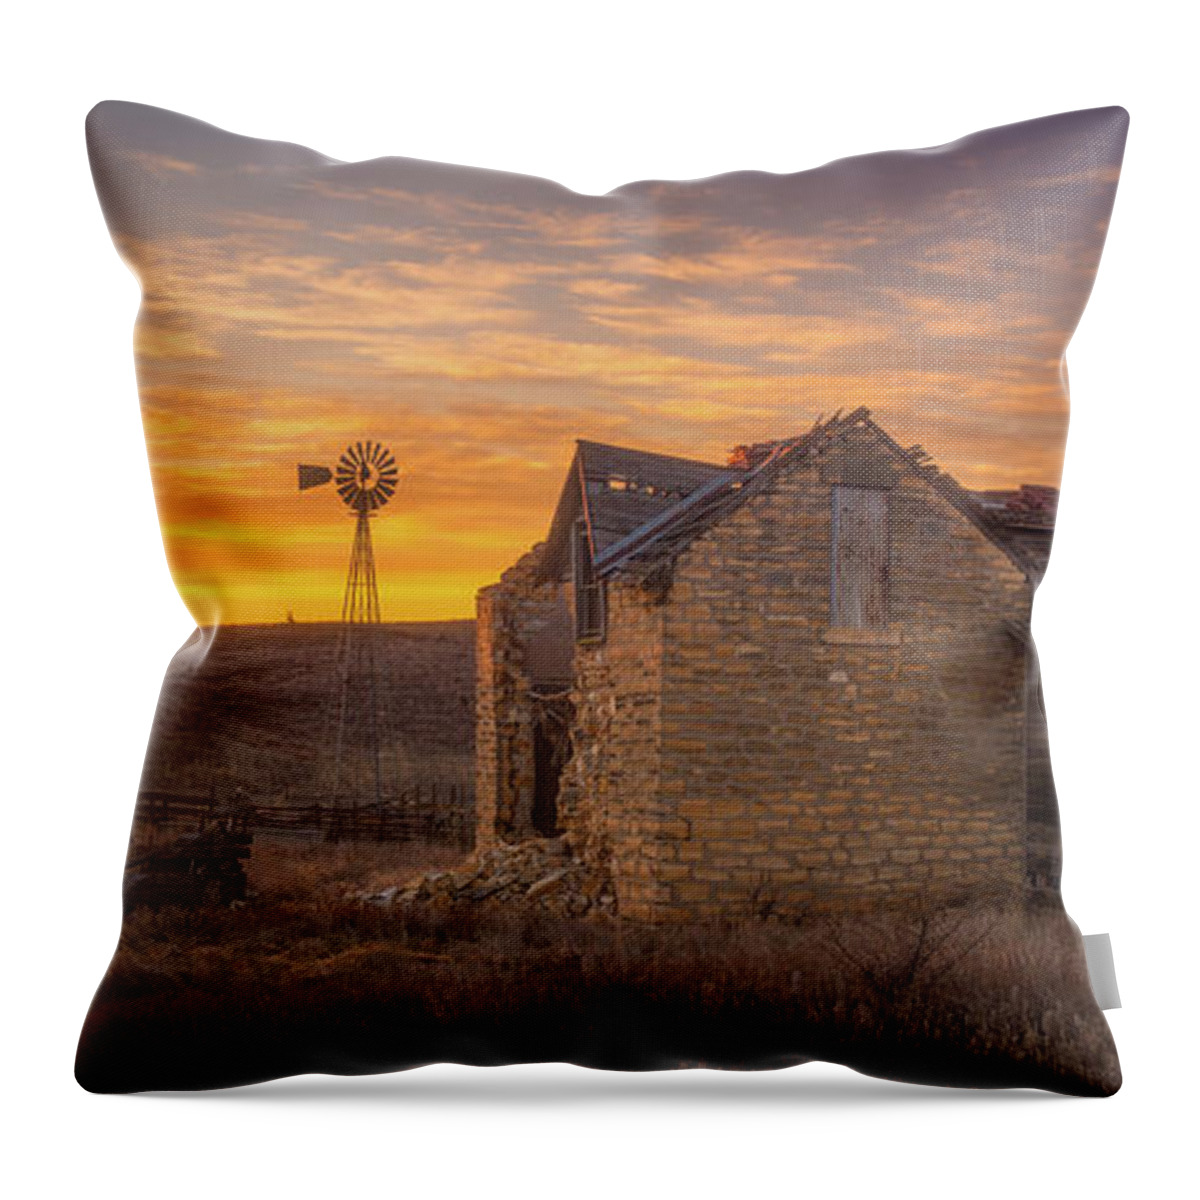 Kansas Throw Pillow featuring the photograph Homestead Sunrise by Darren White